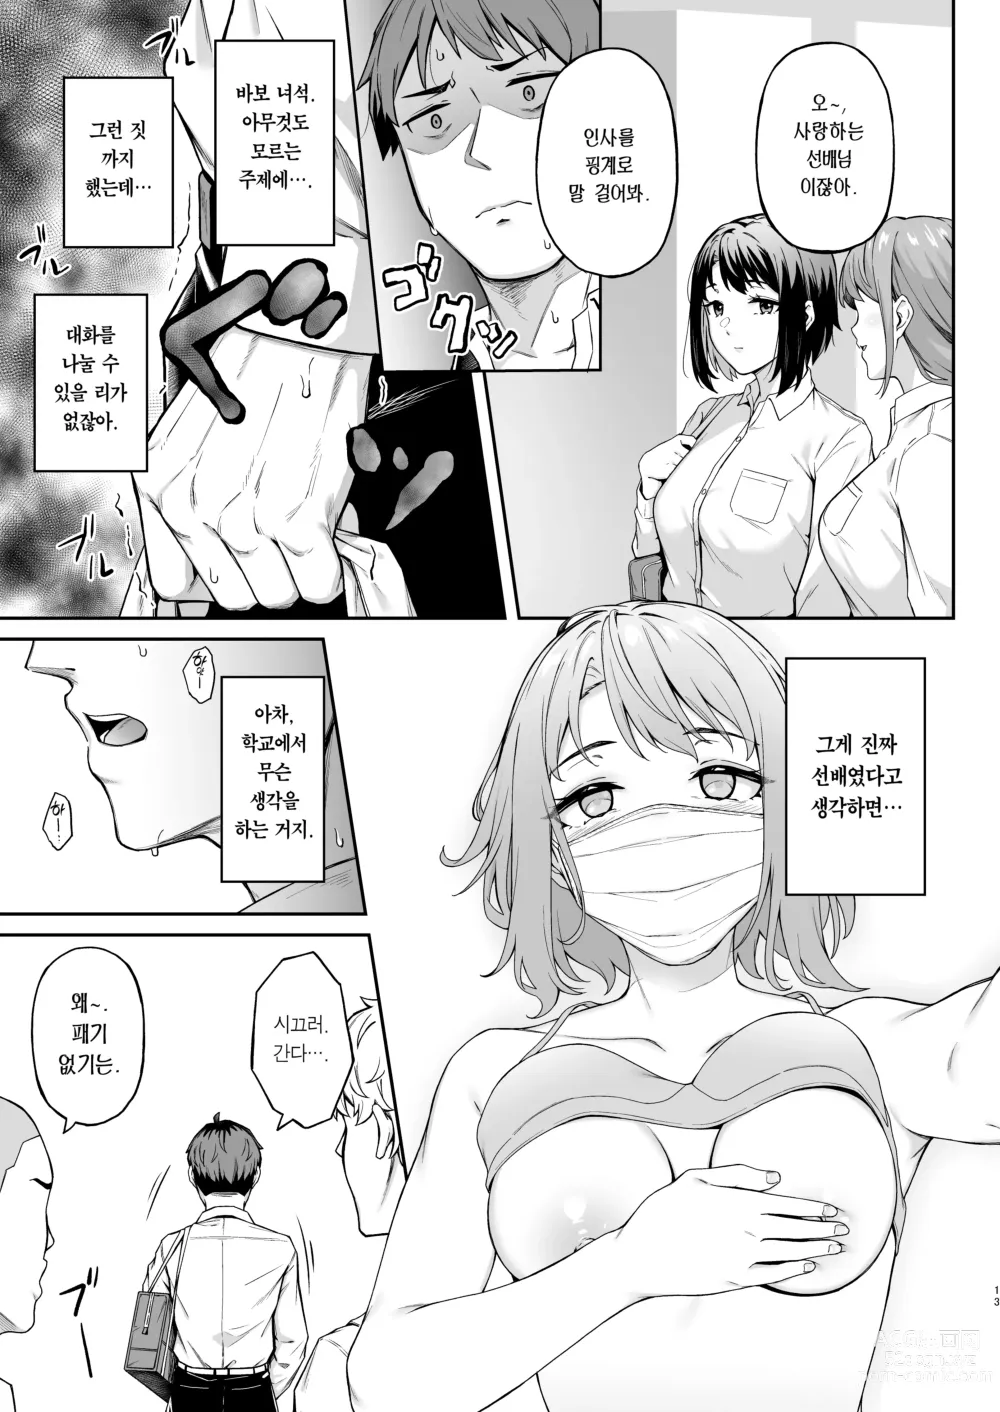 Page 12 of doujinshi 그저 슬픈 척을 한다